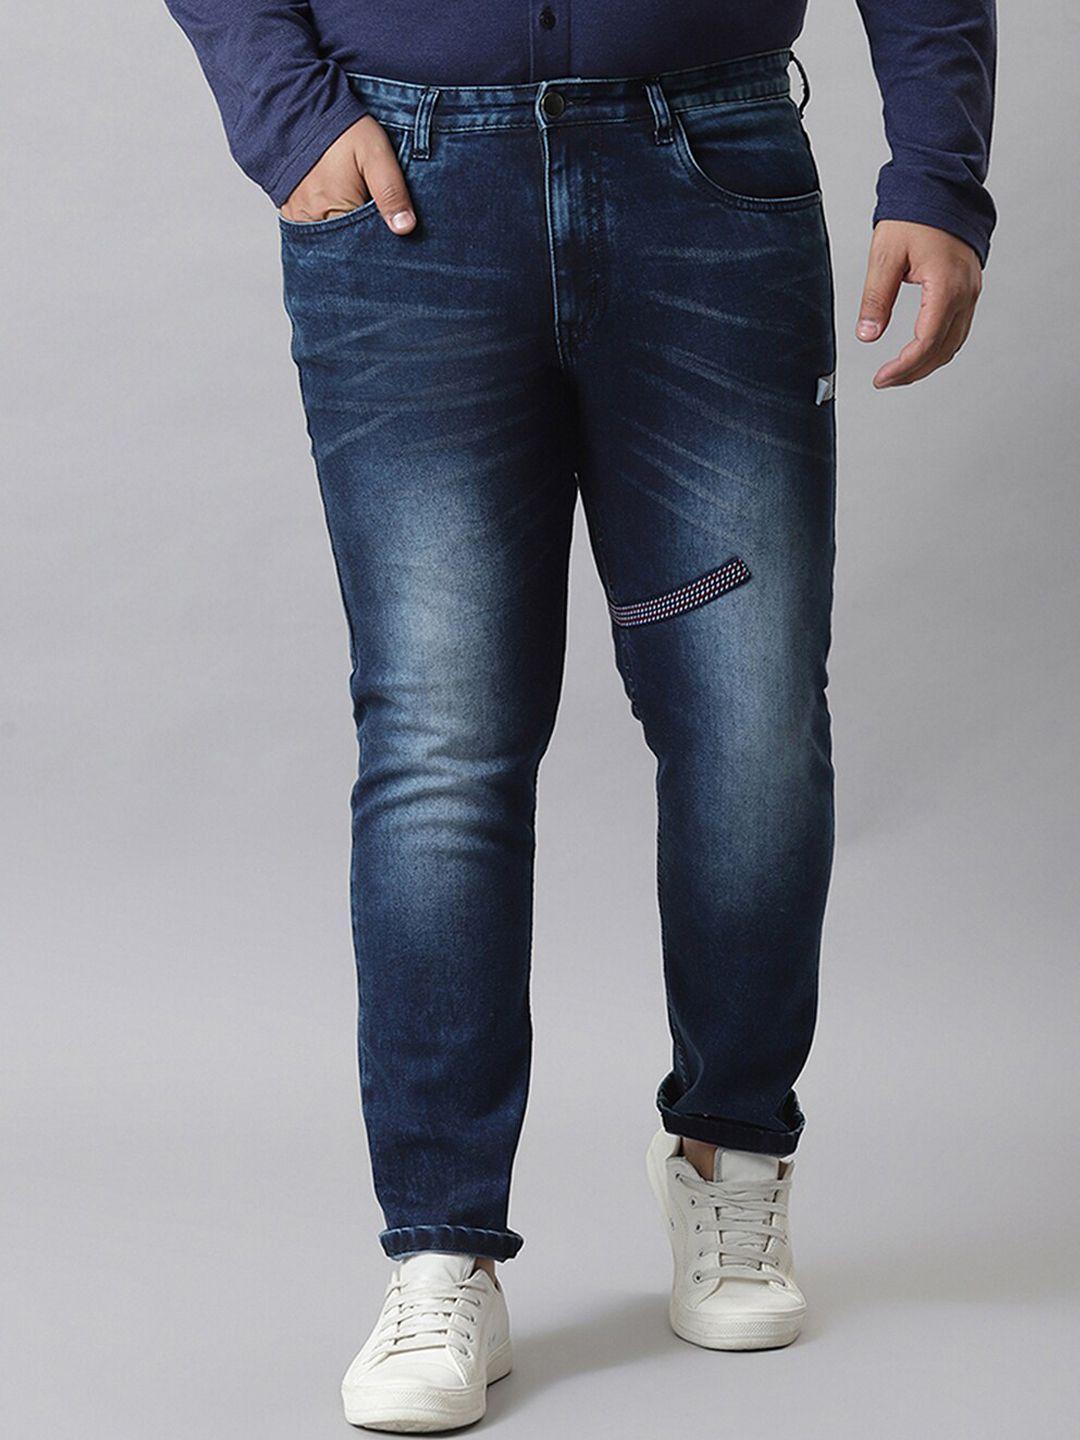 instafab-plus-plus-size-men-jean-relaxed-fit-light-fade-cotton-stretchable-jeans